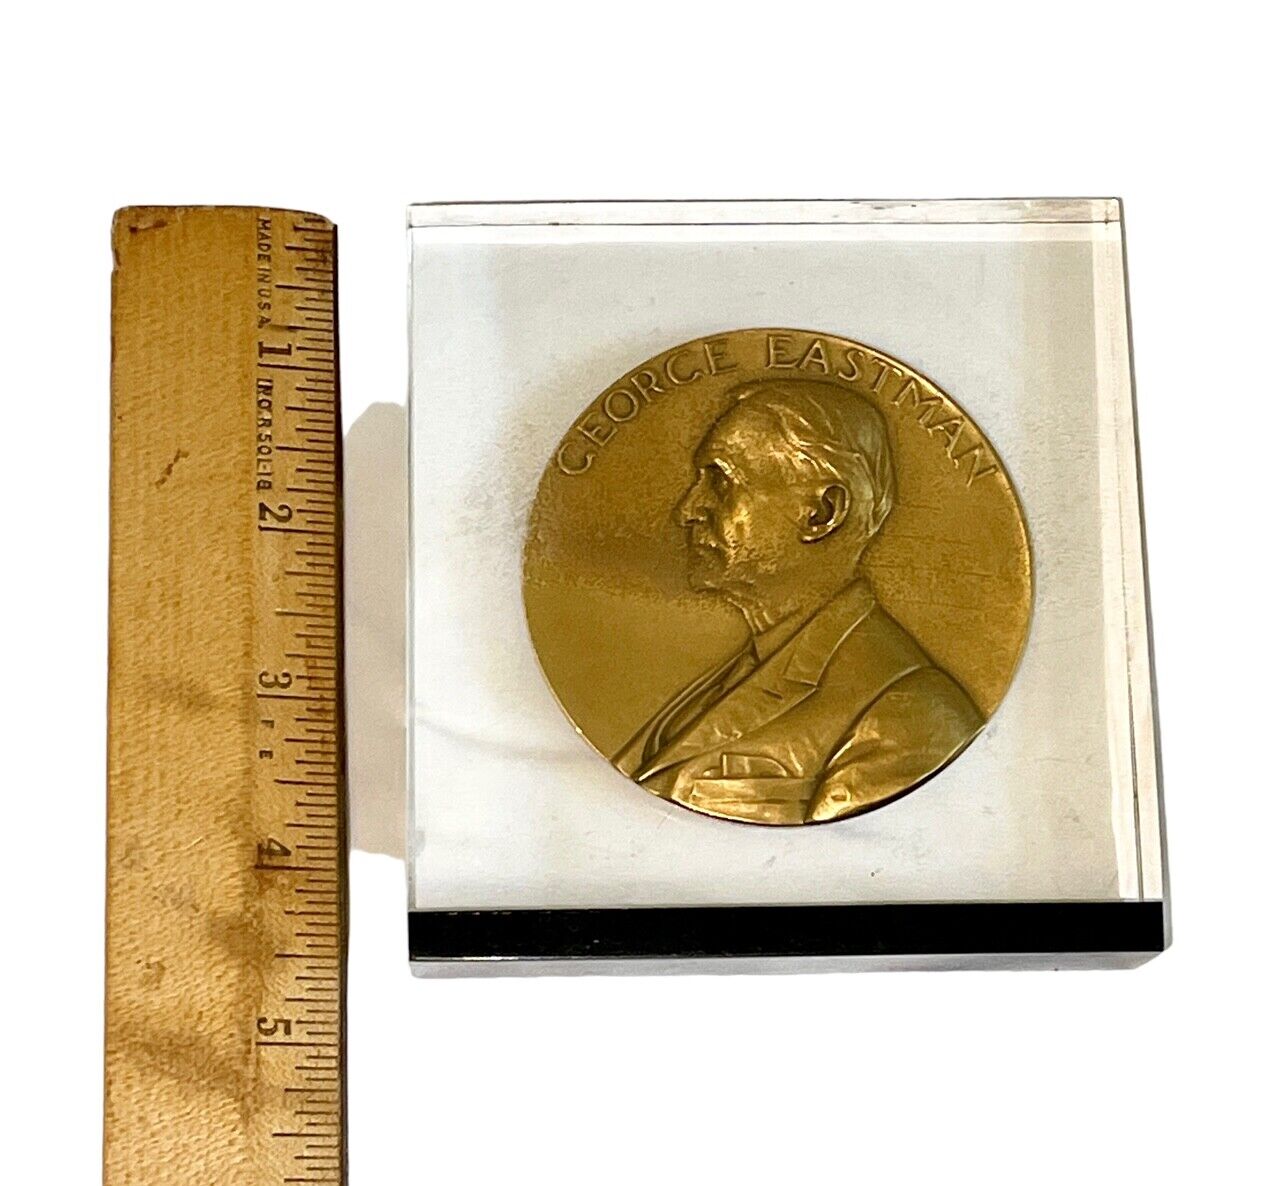 Vintage 25 Yr Employee Service Award Eastman Kodak Bronze Medal 1976 Recognition